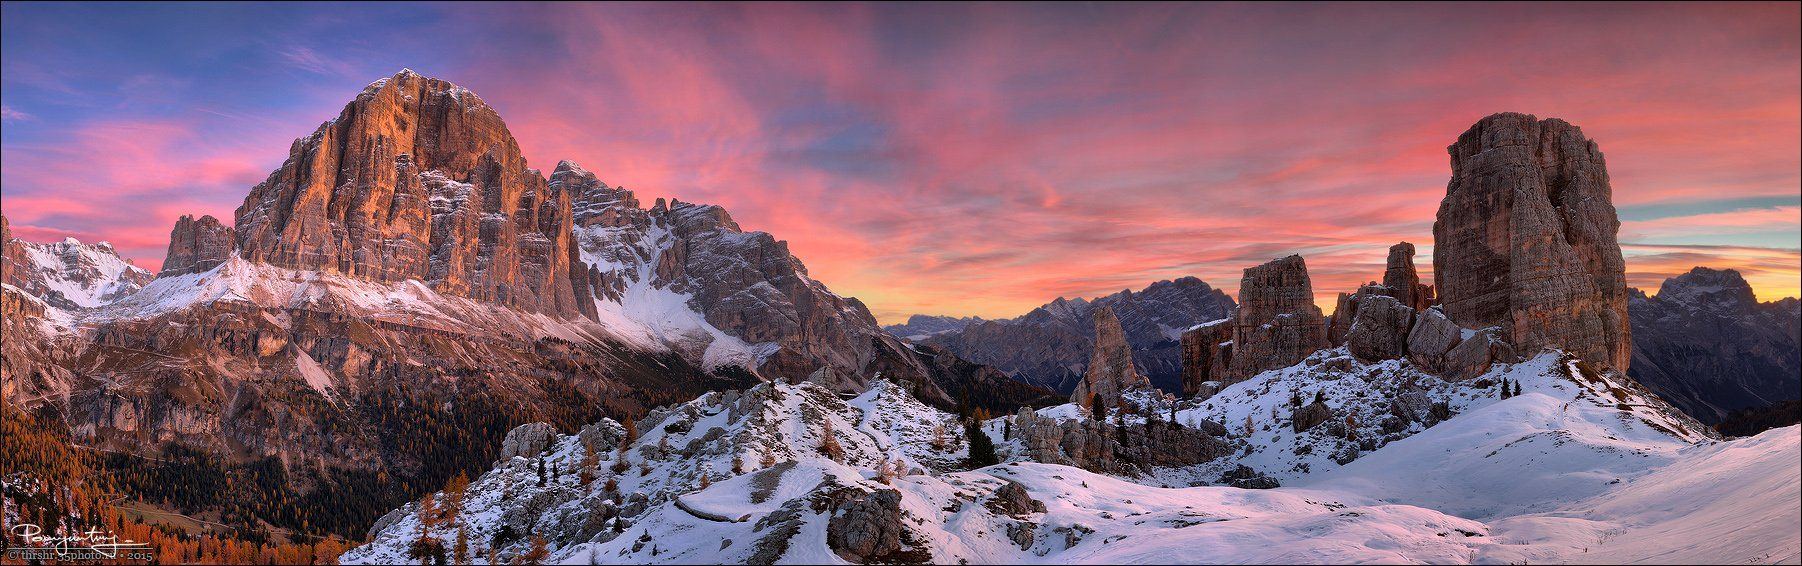 Alps, Bolzano, Cinque torri, Dawn, Dolomites, Hdr, Italy, Panorama, Snow, South tyrol, Sunrise, Andrew Thrasher